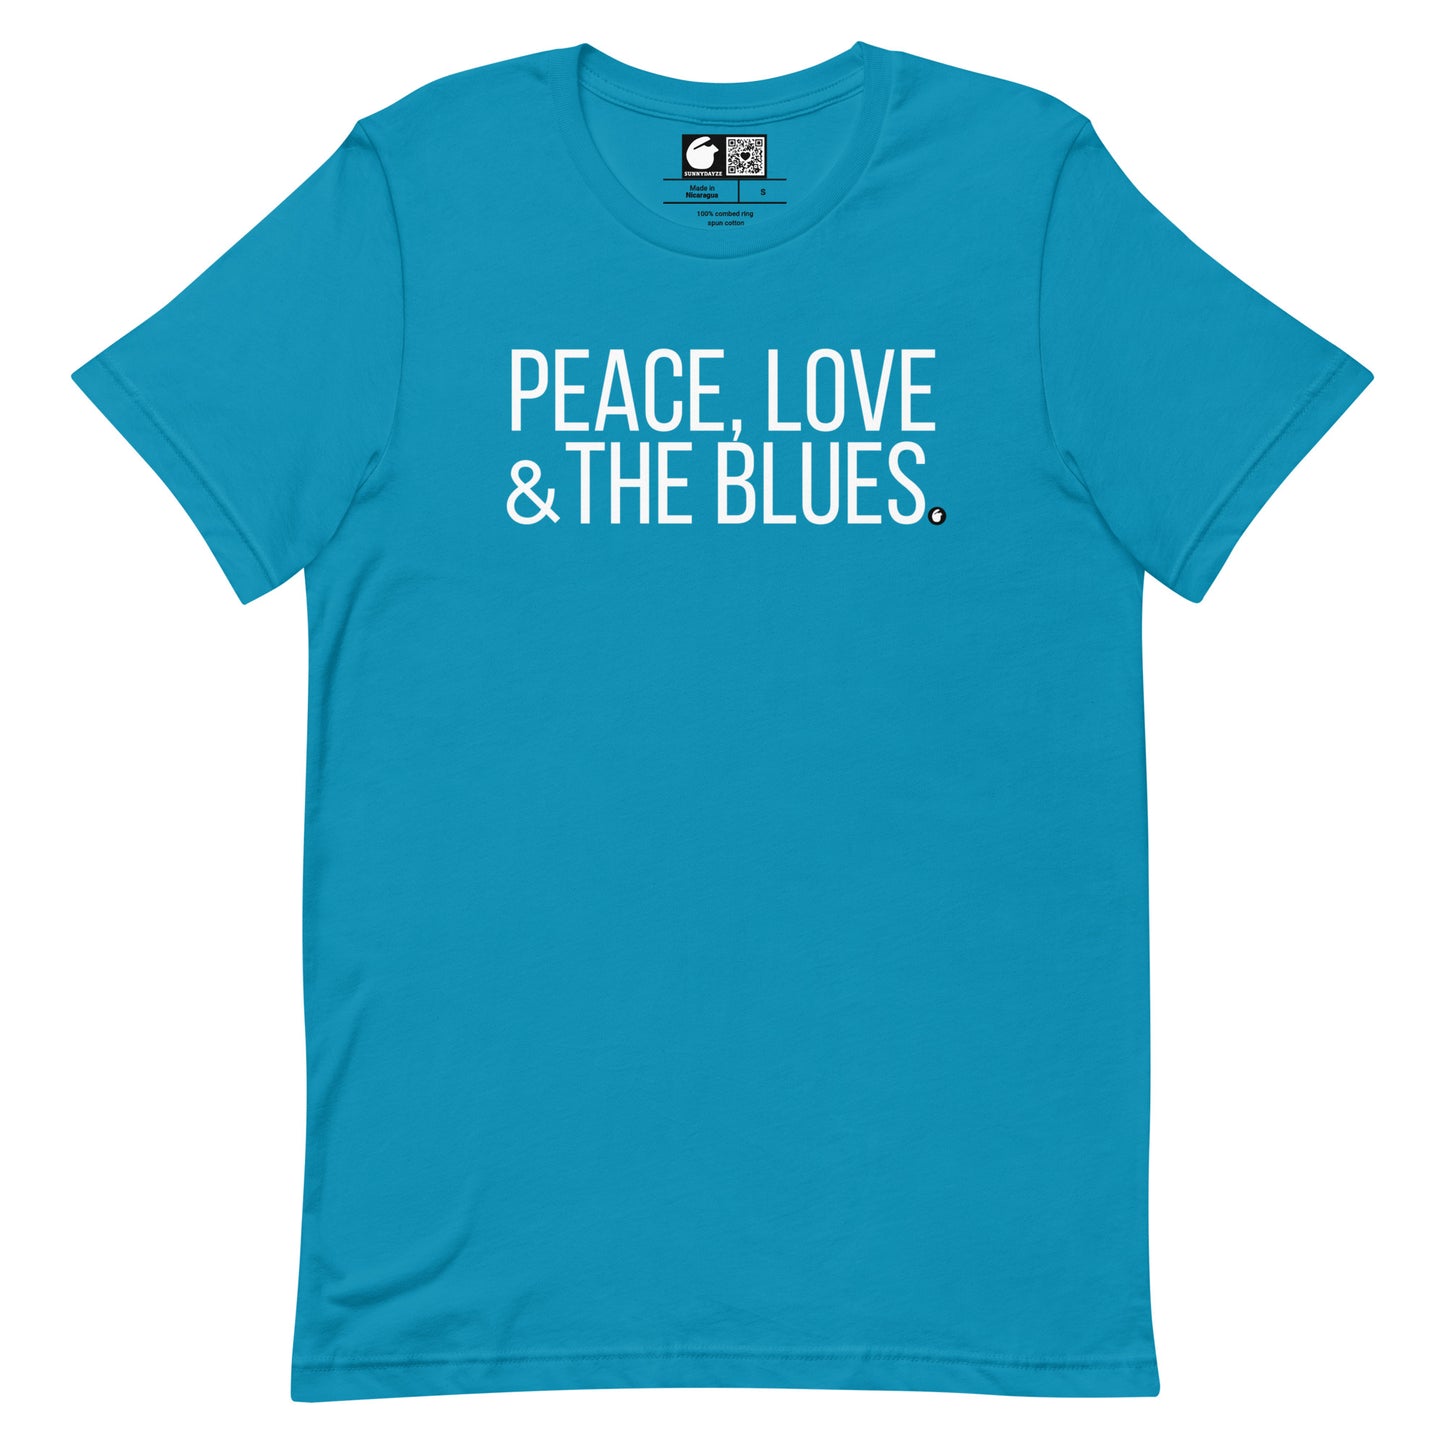 THE BLUES Short-Sleeve Unisex t-shirt